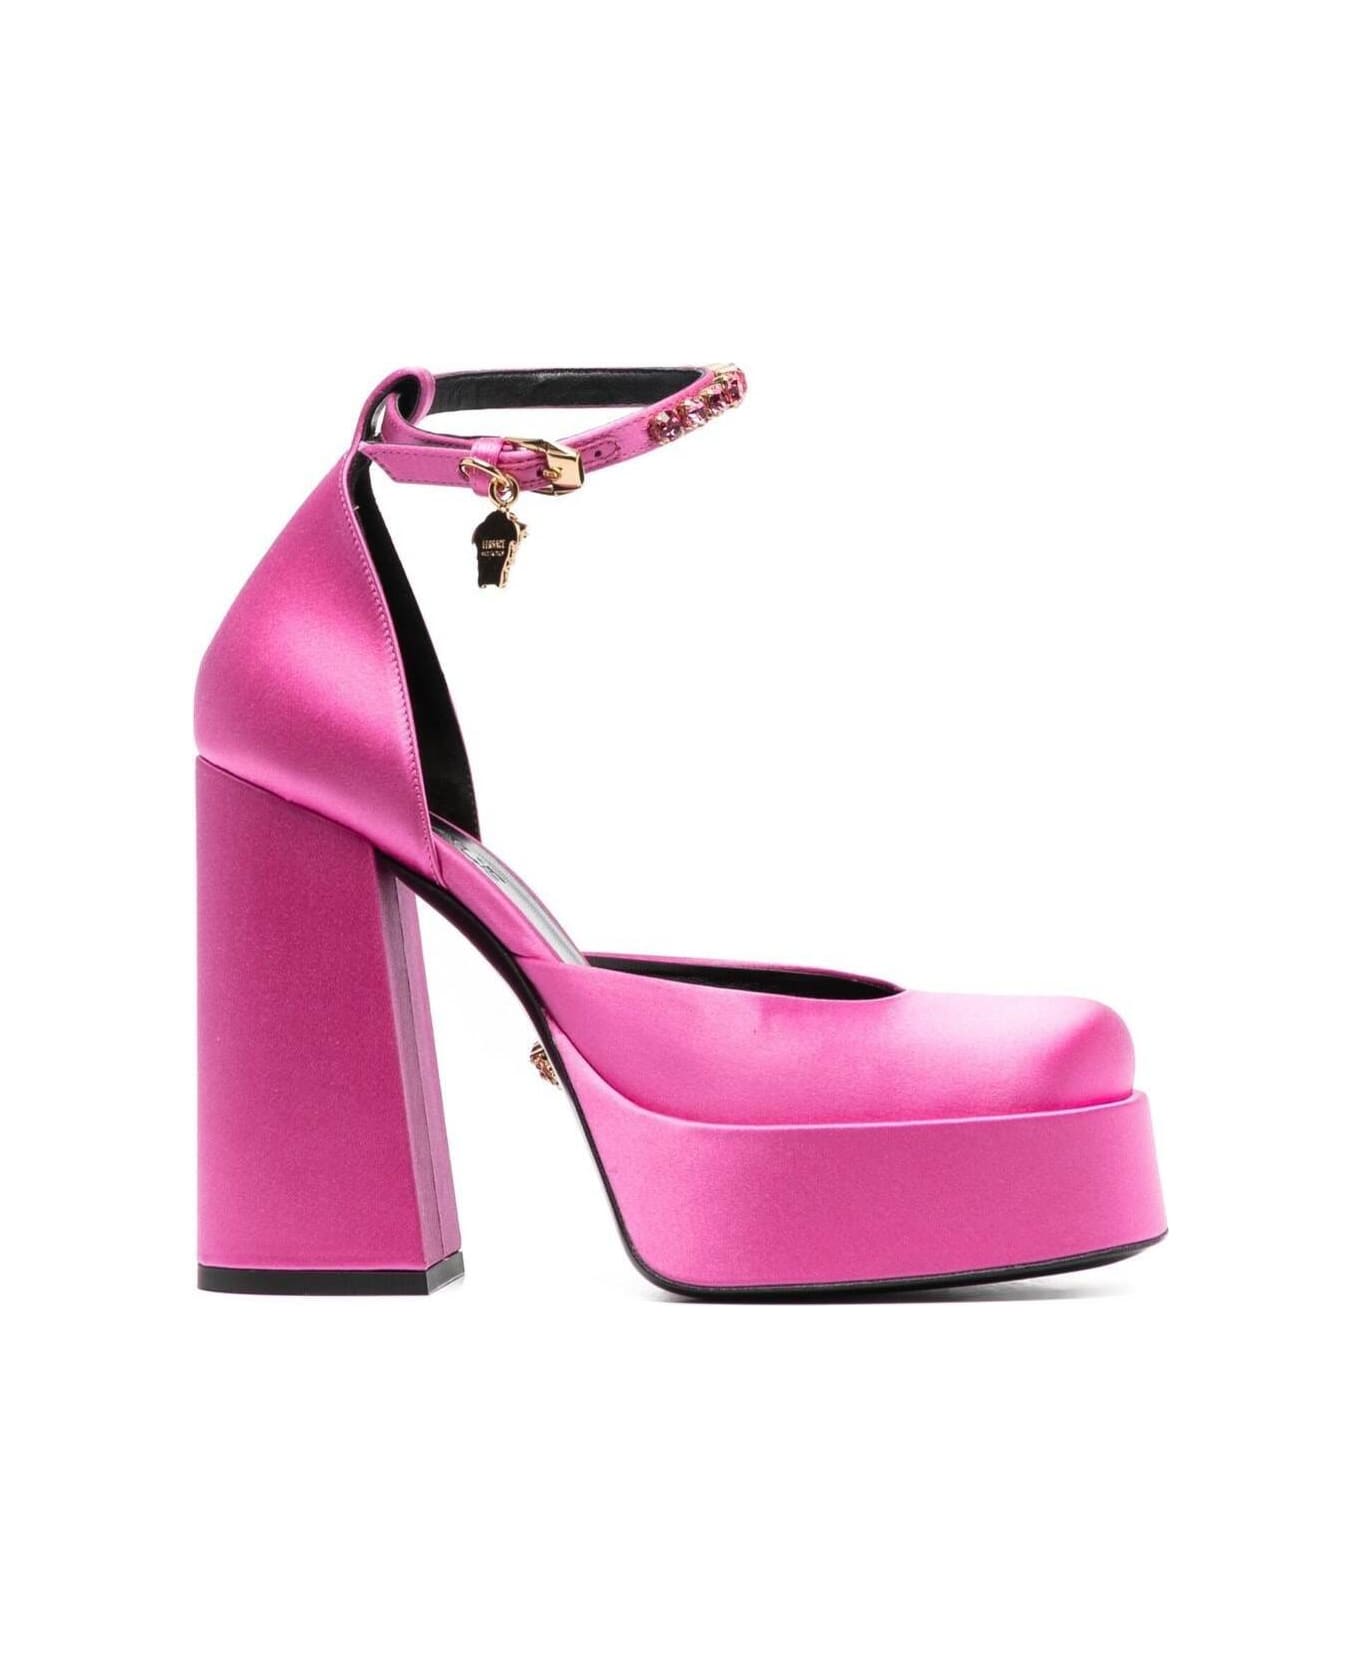 Versace Woman's Pink Satin Pumps - Pink